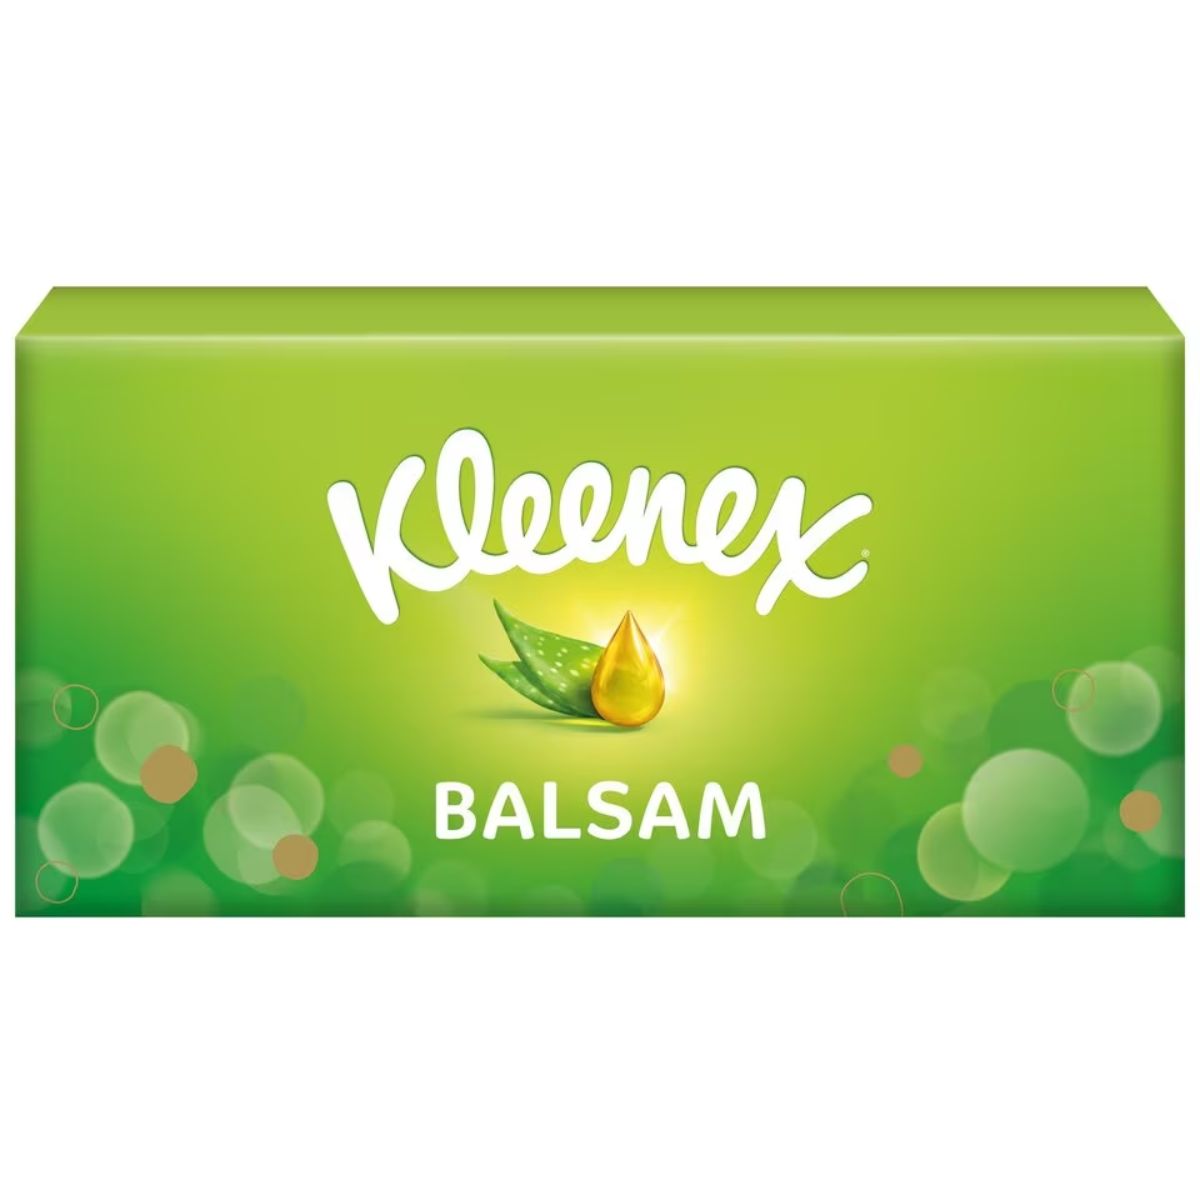 Kleenex - Balsam Tissues 3 Ply - 64 Sheets facial wipes.